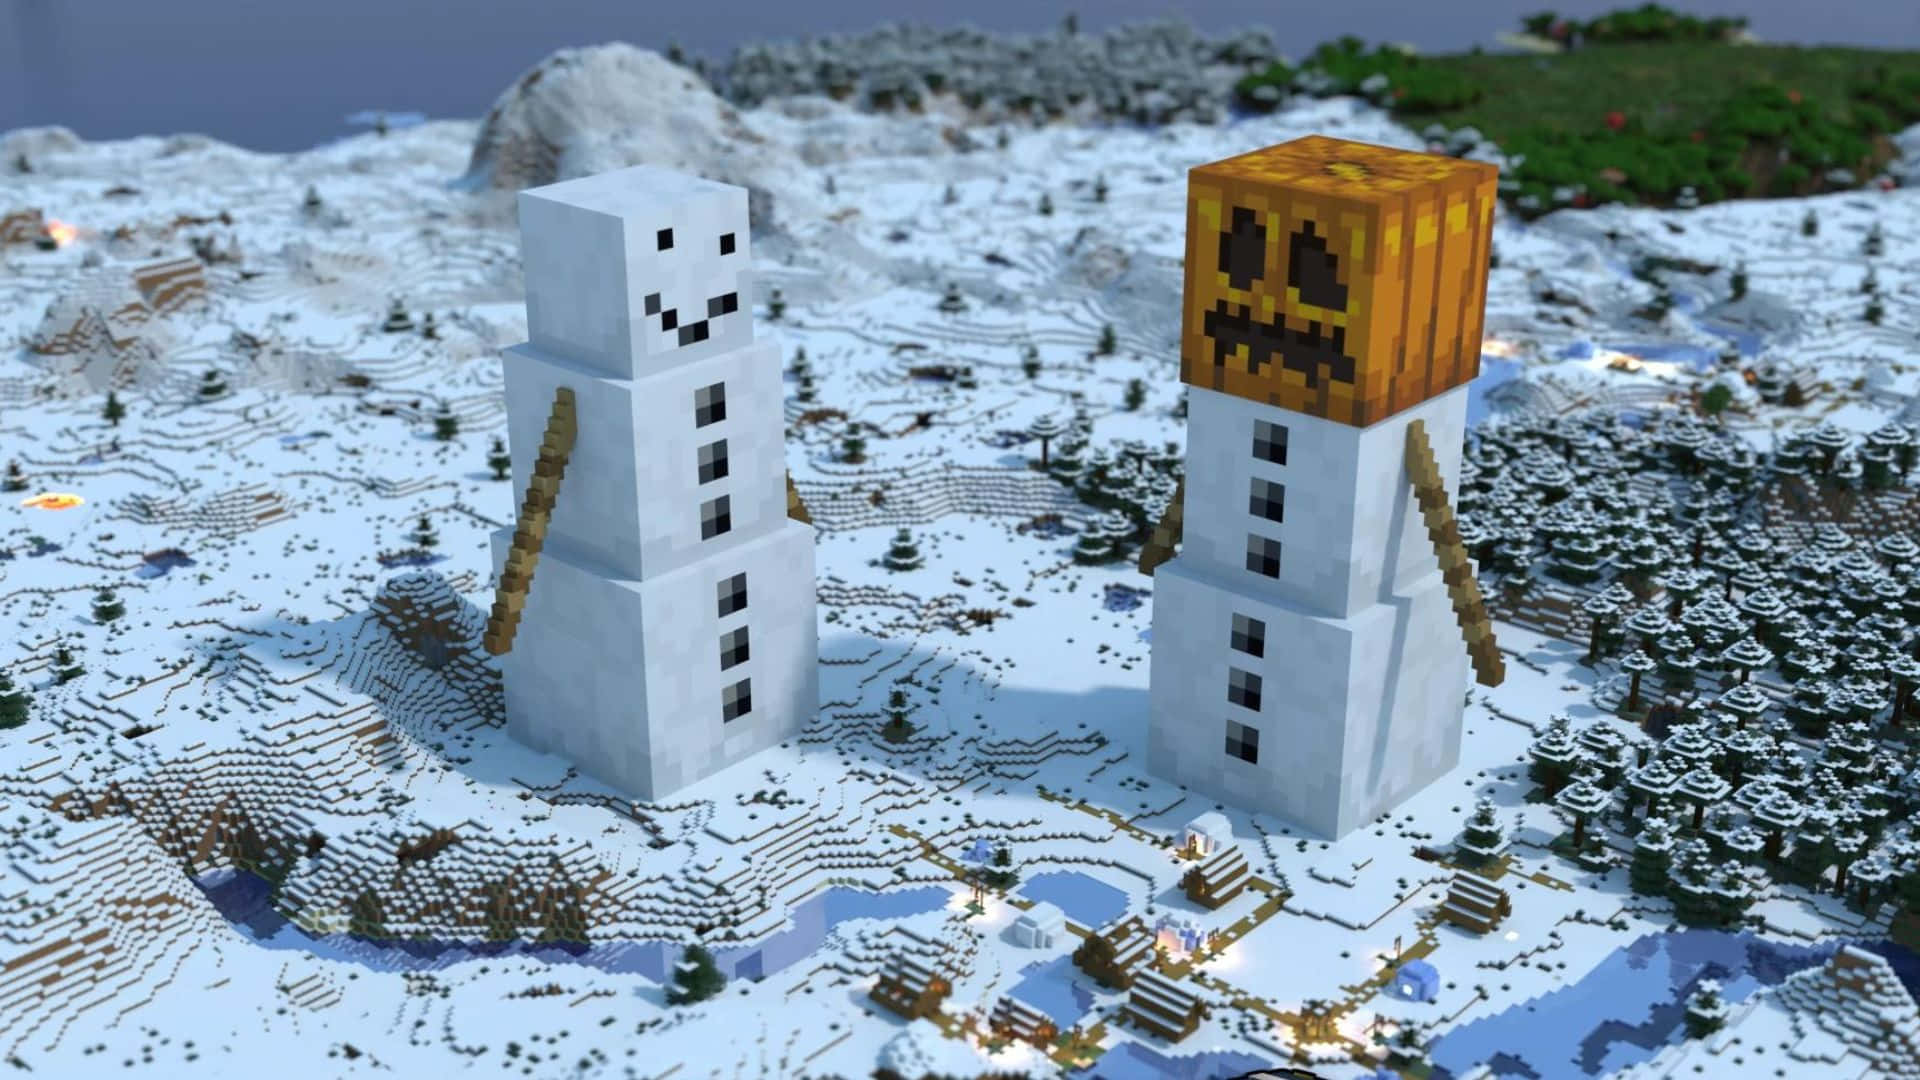 A Minecraft Snow Golem standing tall in a snowy landscape Wallpaper